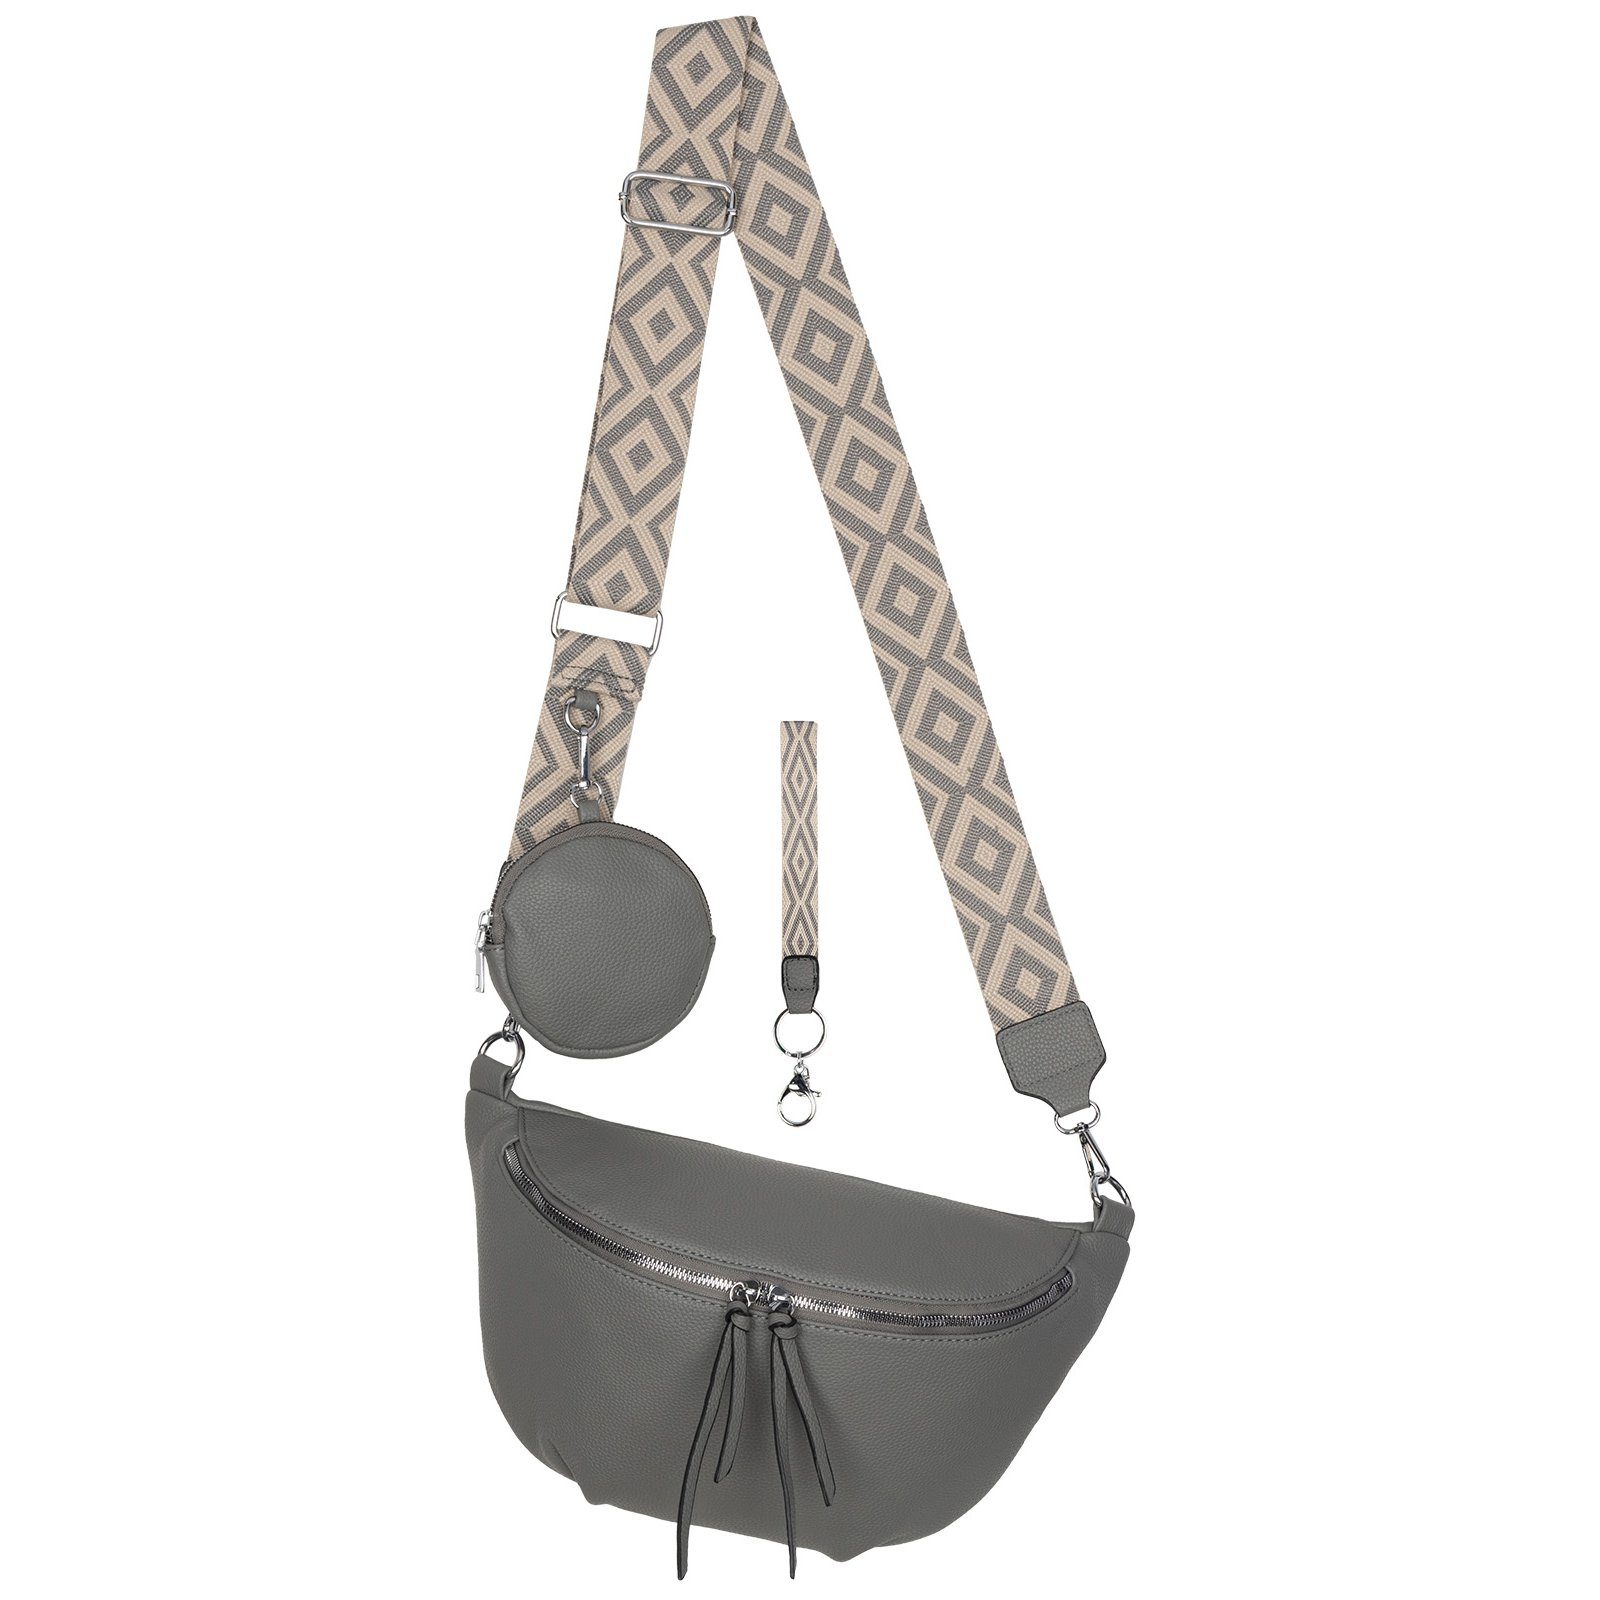 EAAKIE Gürteltasche Bauchtasche Umhängetasche Crossbody-Bag Hüfttasche Kunstleder Italy-D, als Schultertasche, CrossOver, Umhängetasche tragbar GREY